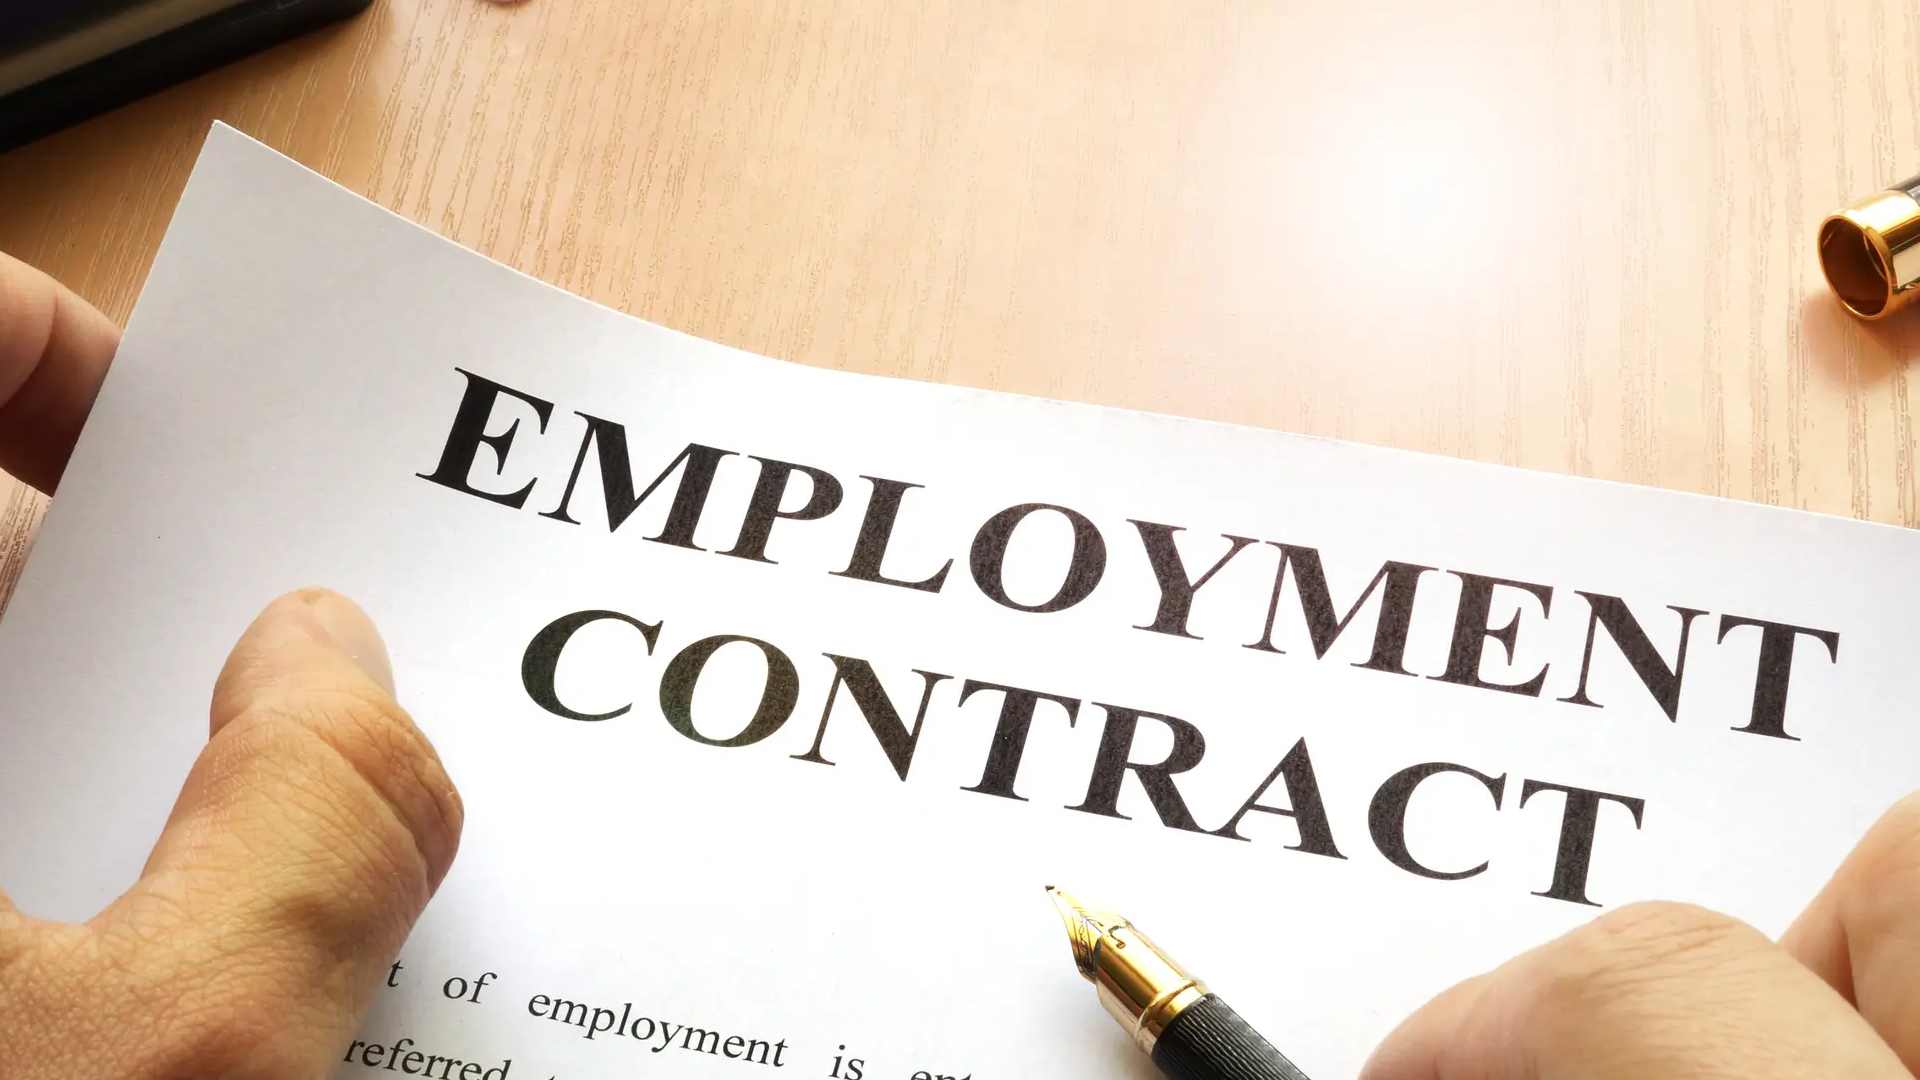 UAE Labour Contract 